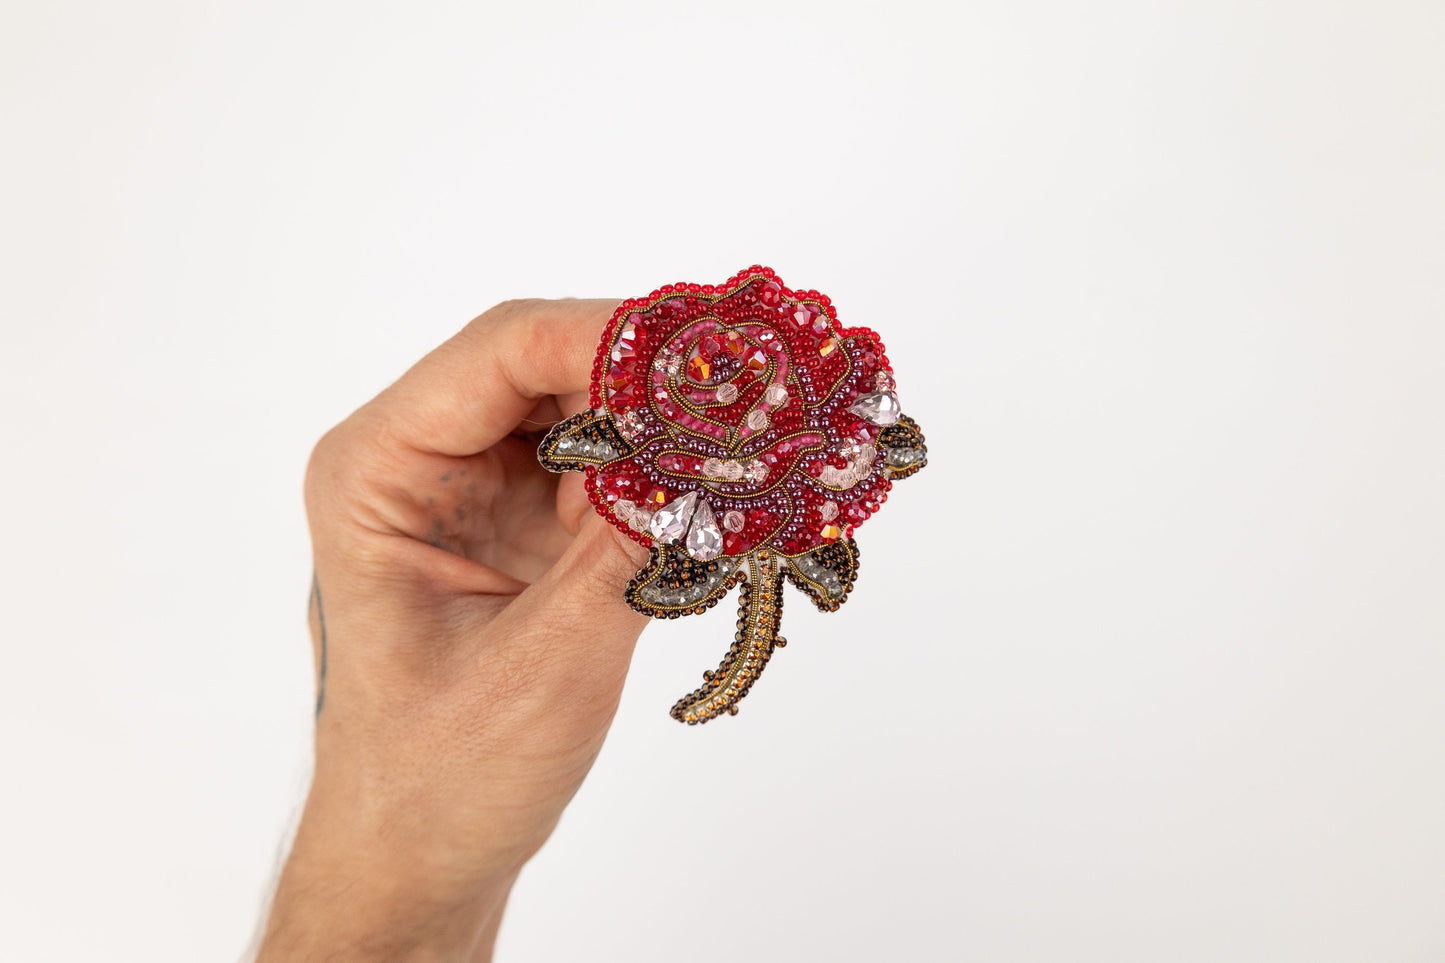 Rose Flower Bead embroidery kit. Seed Bead Brooch kit. DIY Craft kit. Beading kit. Needlework beading. Handmade Jewelry Making Kit